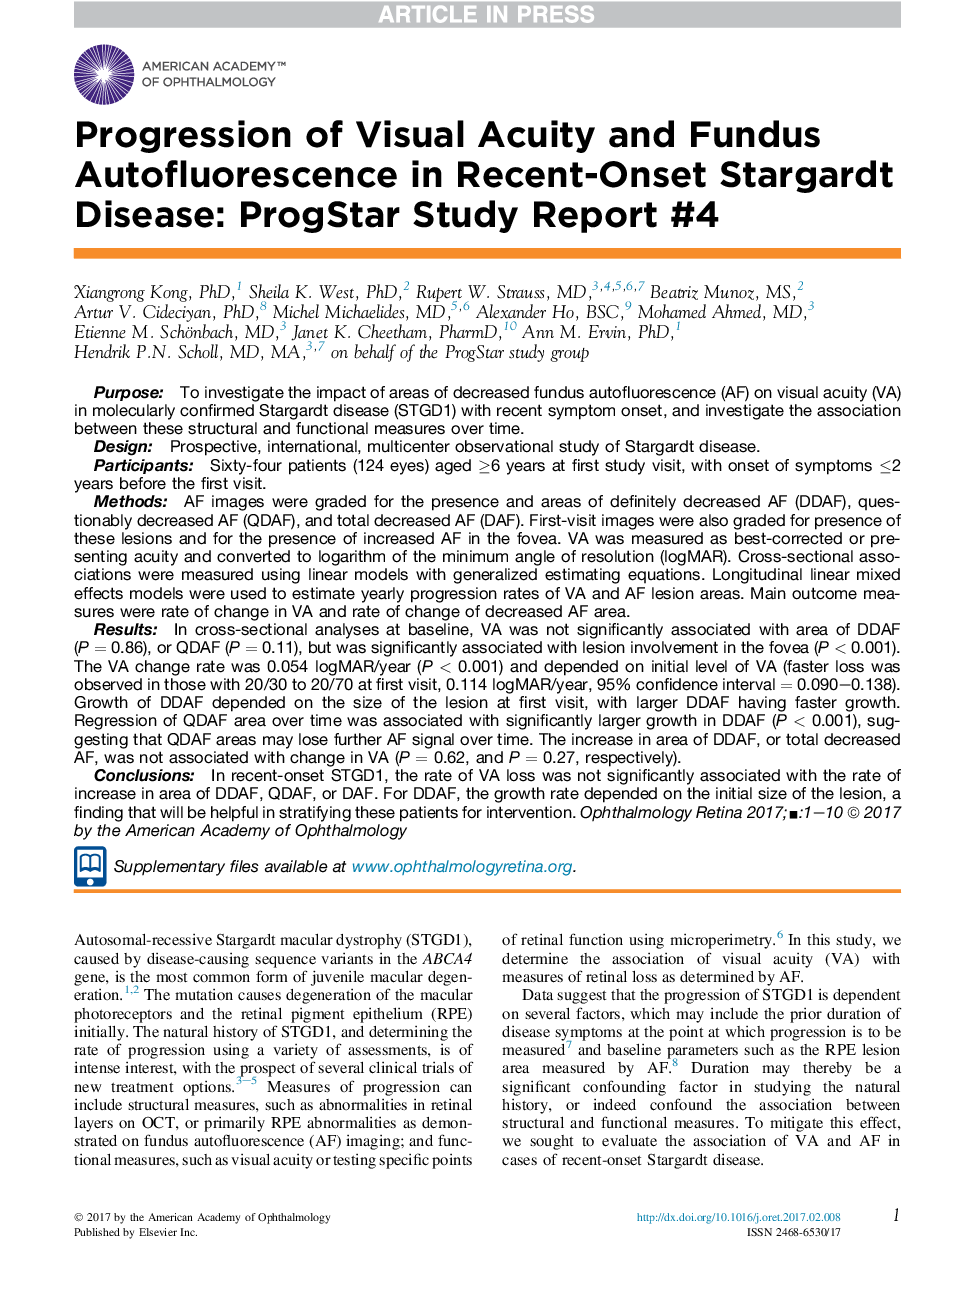 Progression of Visual Acuity and Fundus Autofluorescence in Recent-Onset Stargardt Disease: ProgStar Study Report #4